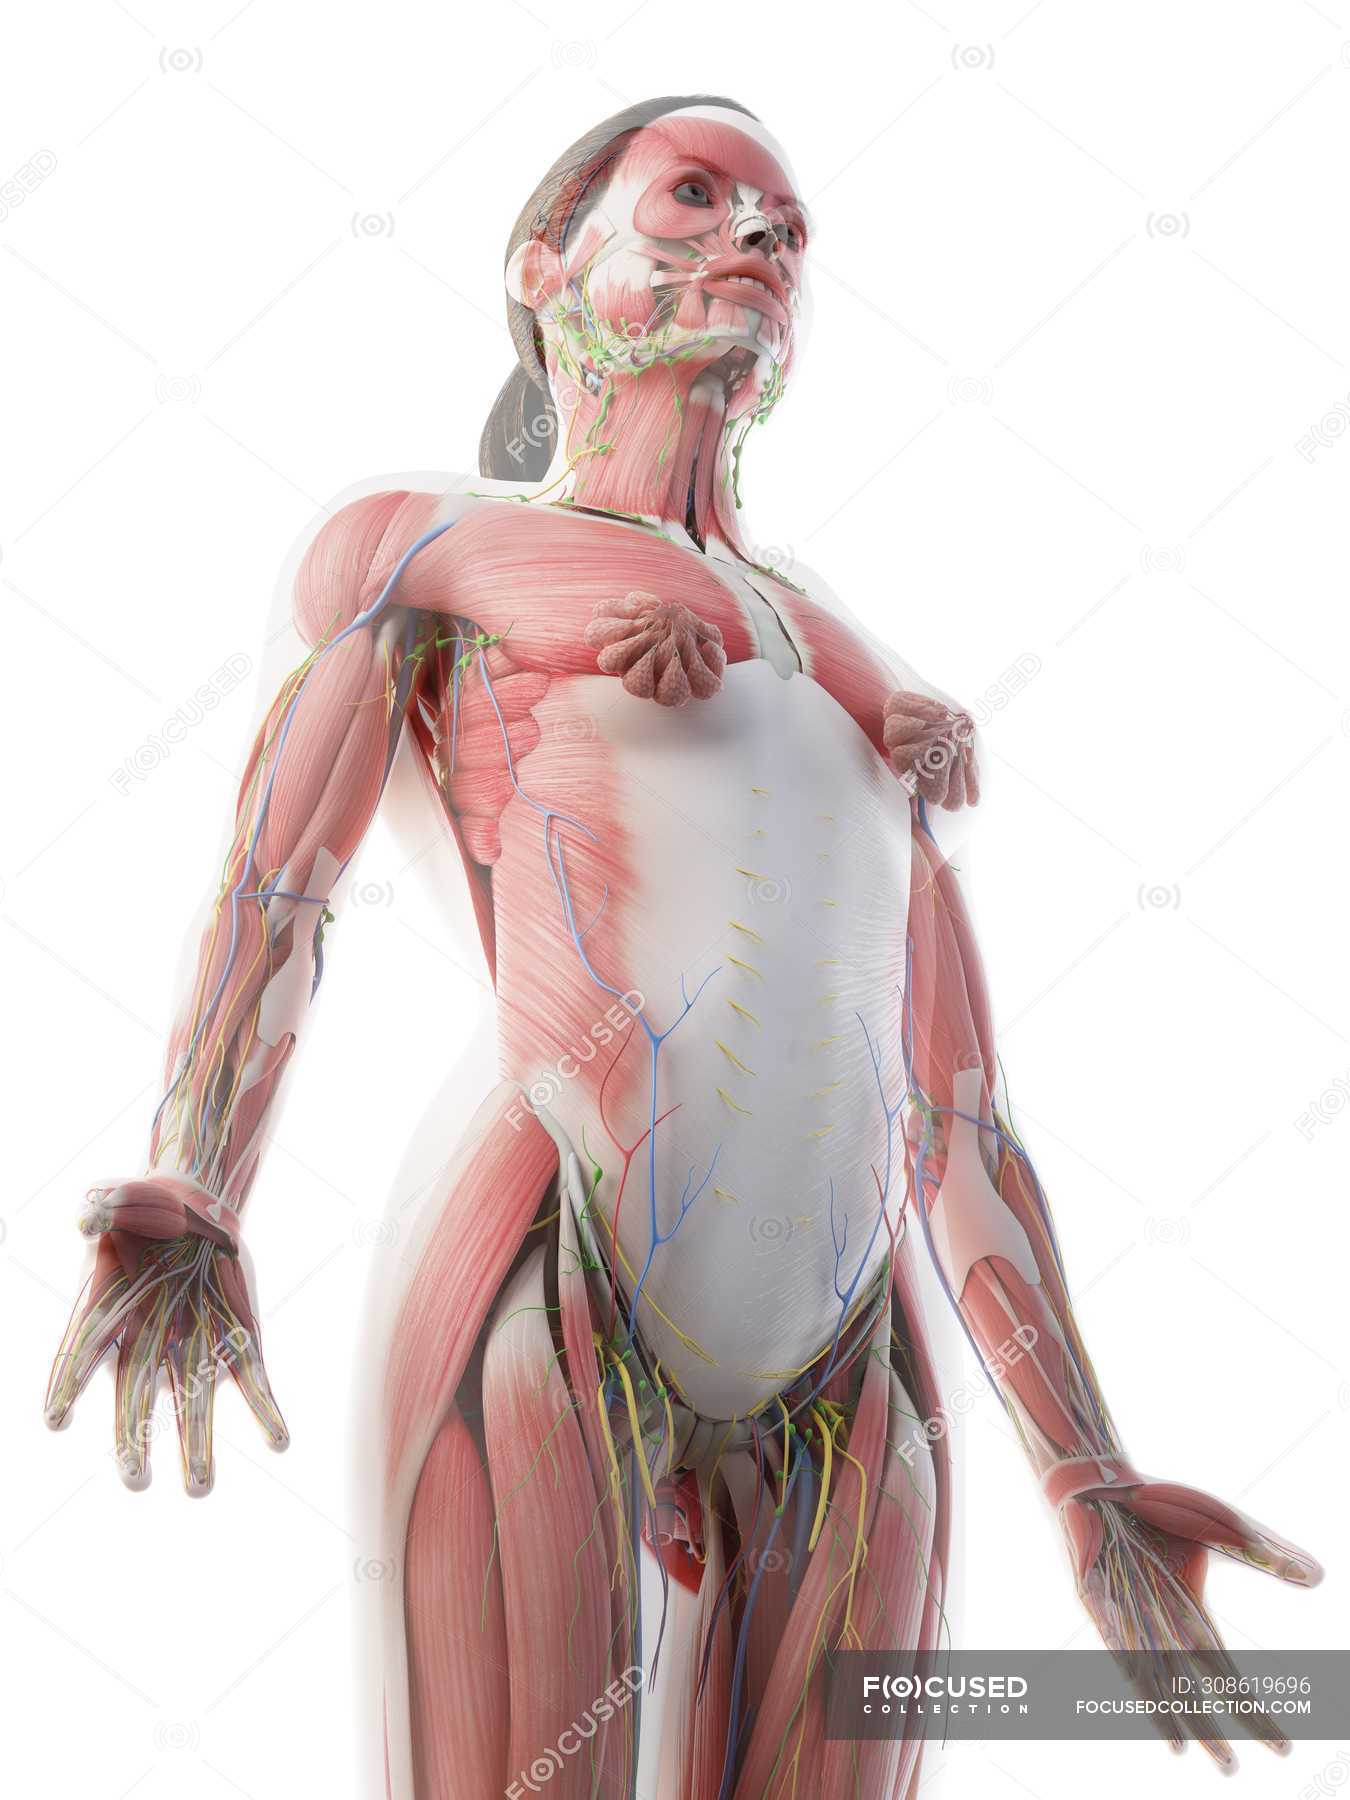 https://st.focusedcollection.com/13422768/i/1800/focused_308619696-stock-photo-female-upper-body-anatomy-muscular.jpg